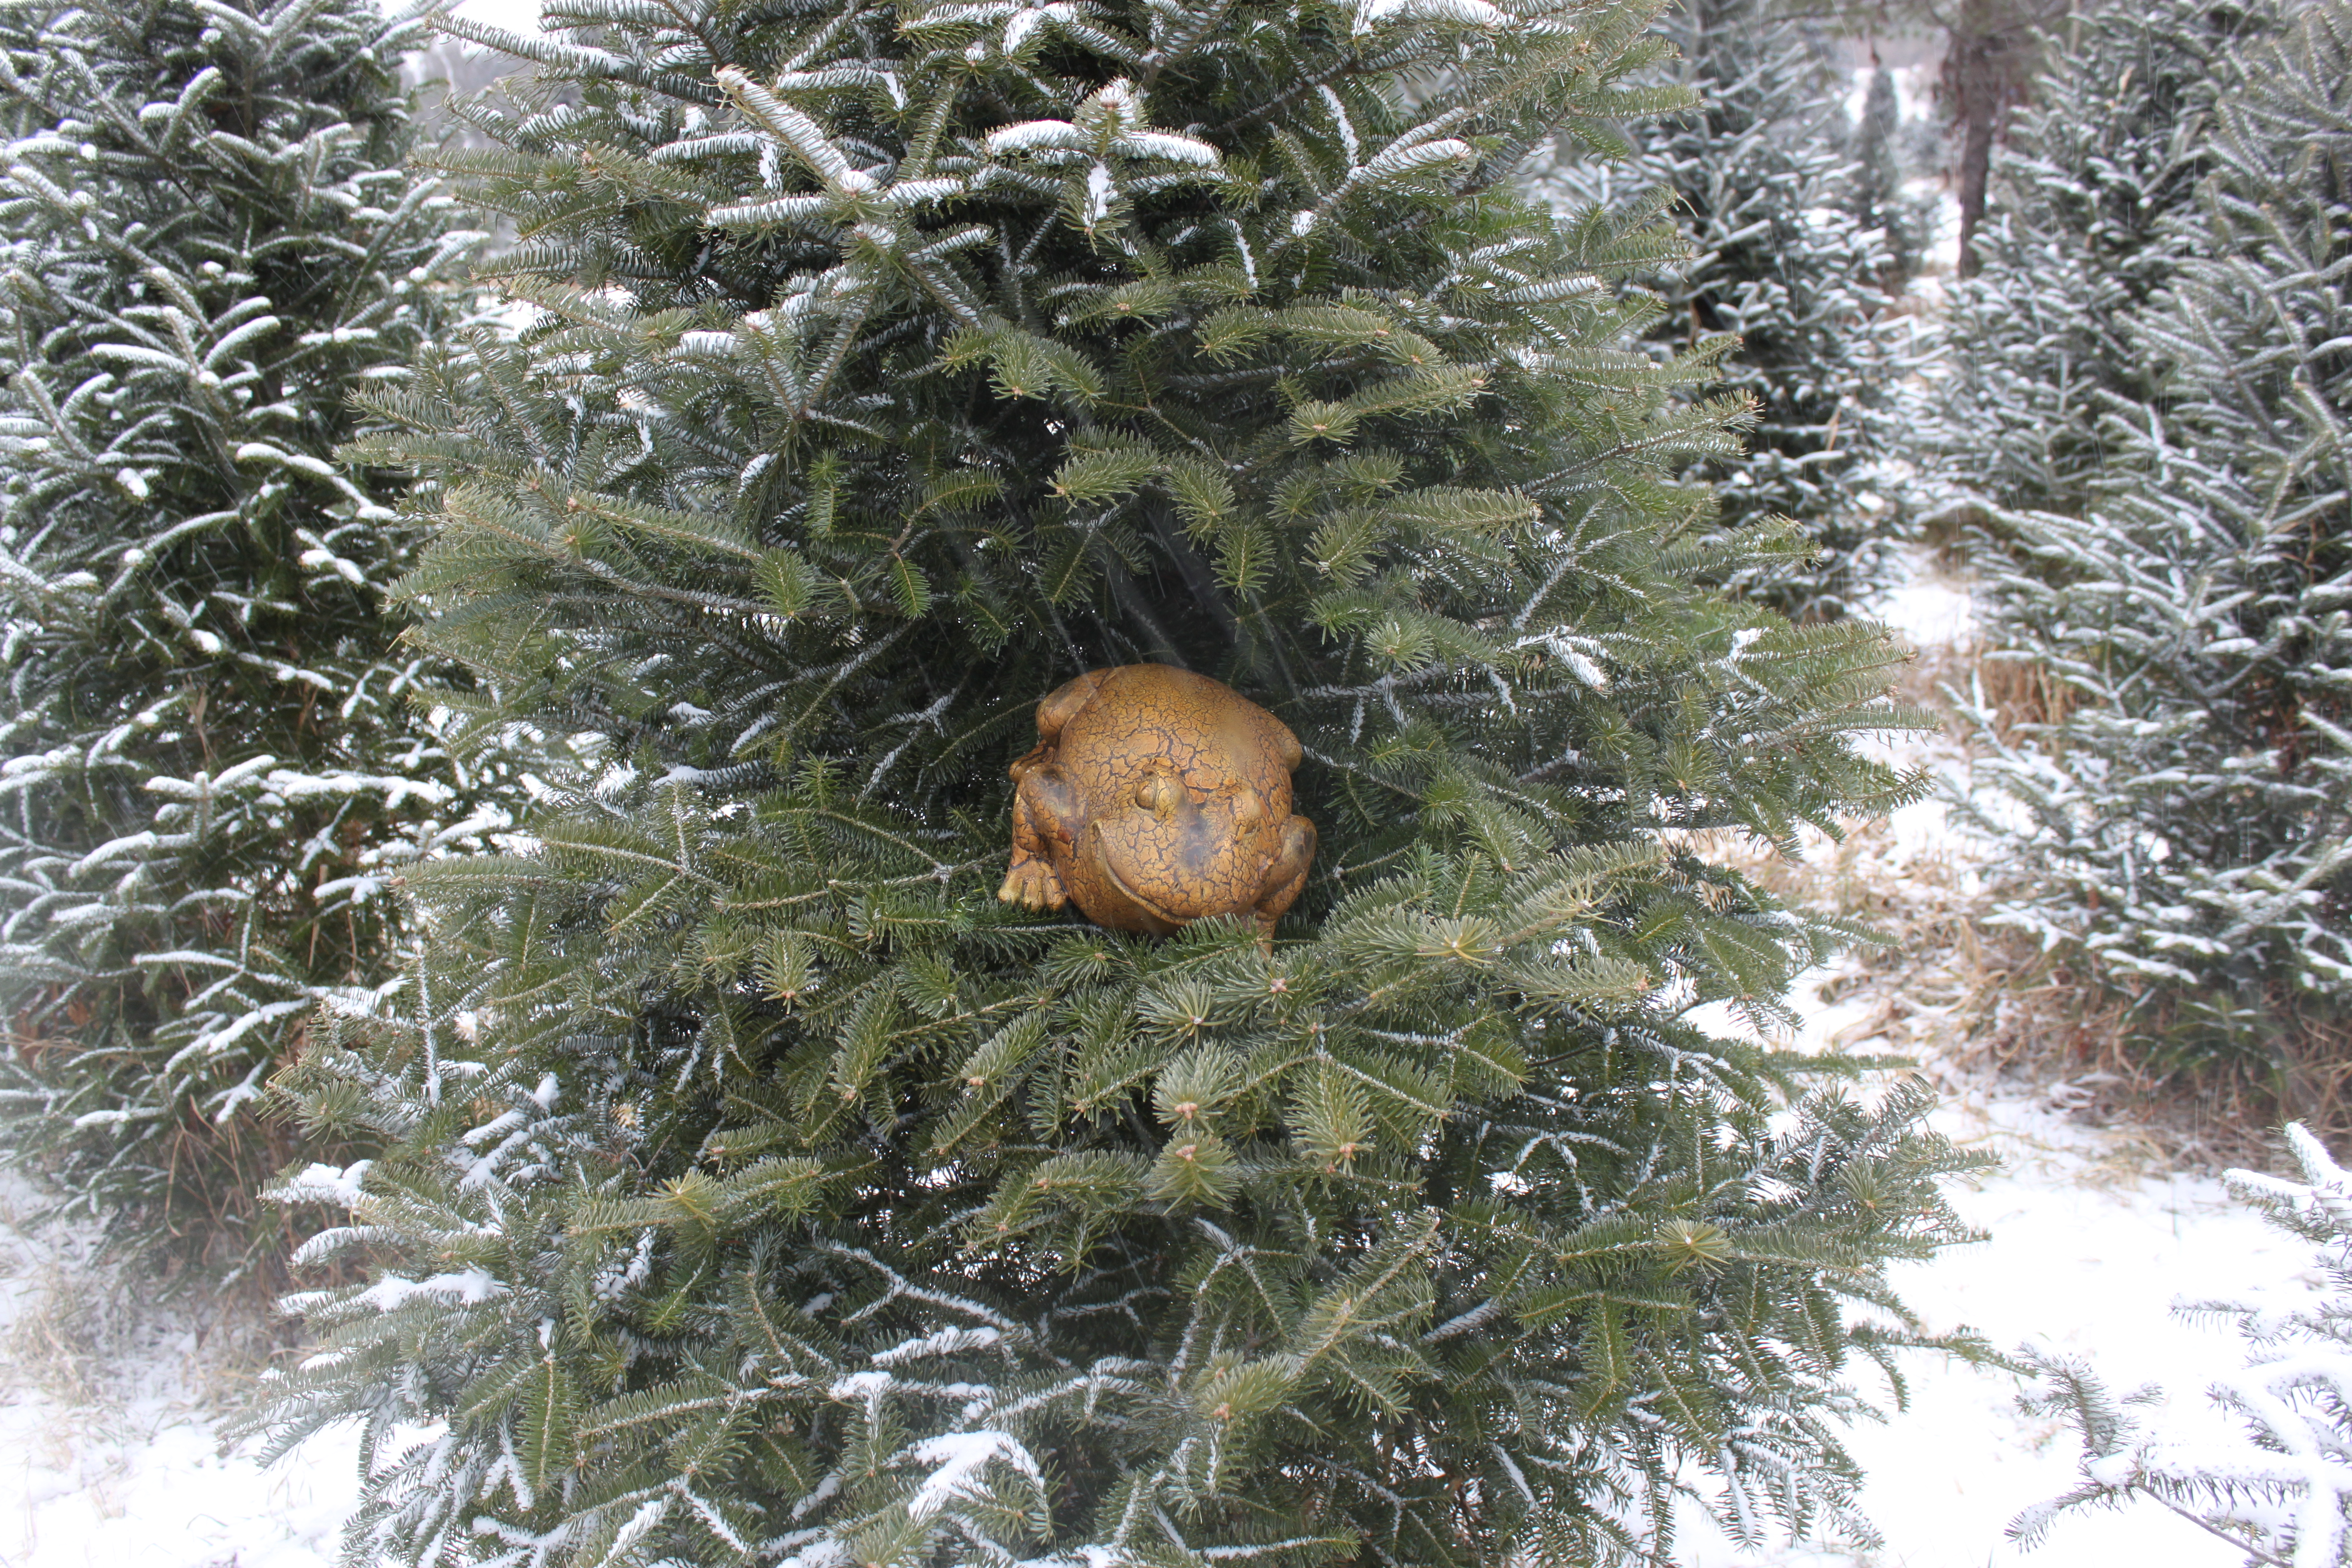 Snowy Christmas Tree Farm